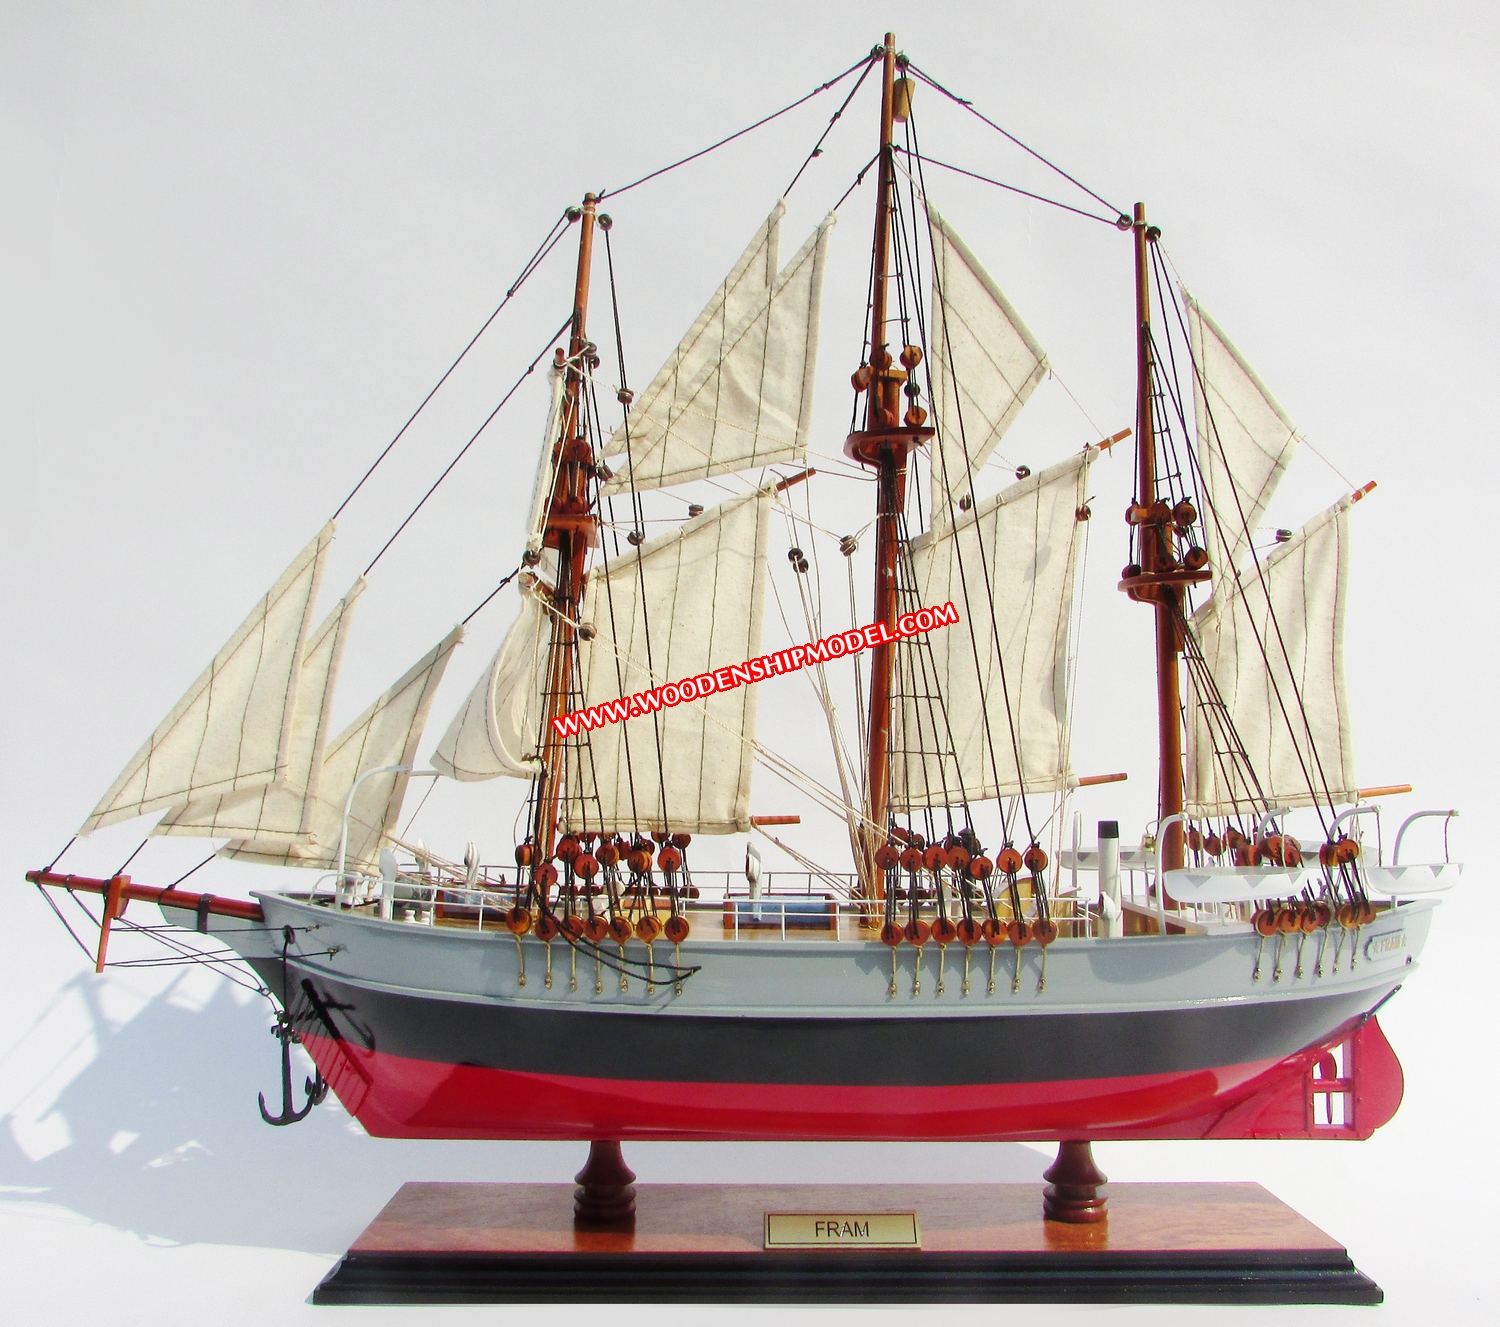 Fram Expedition Ship Model